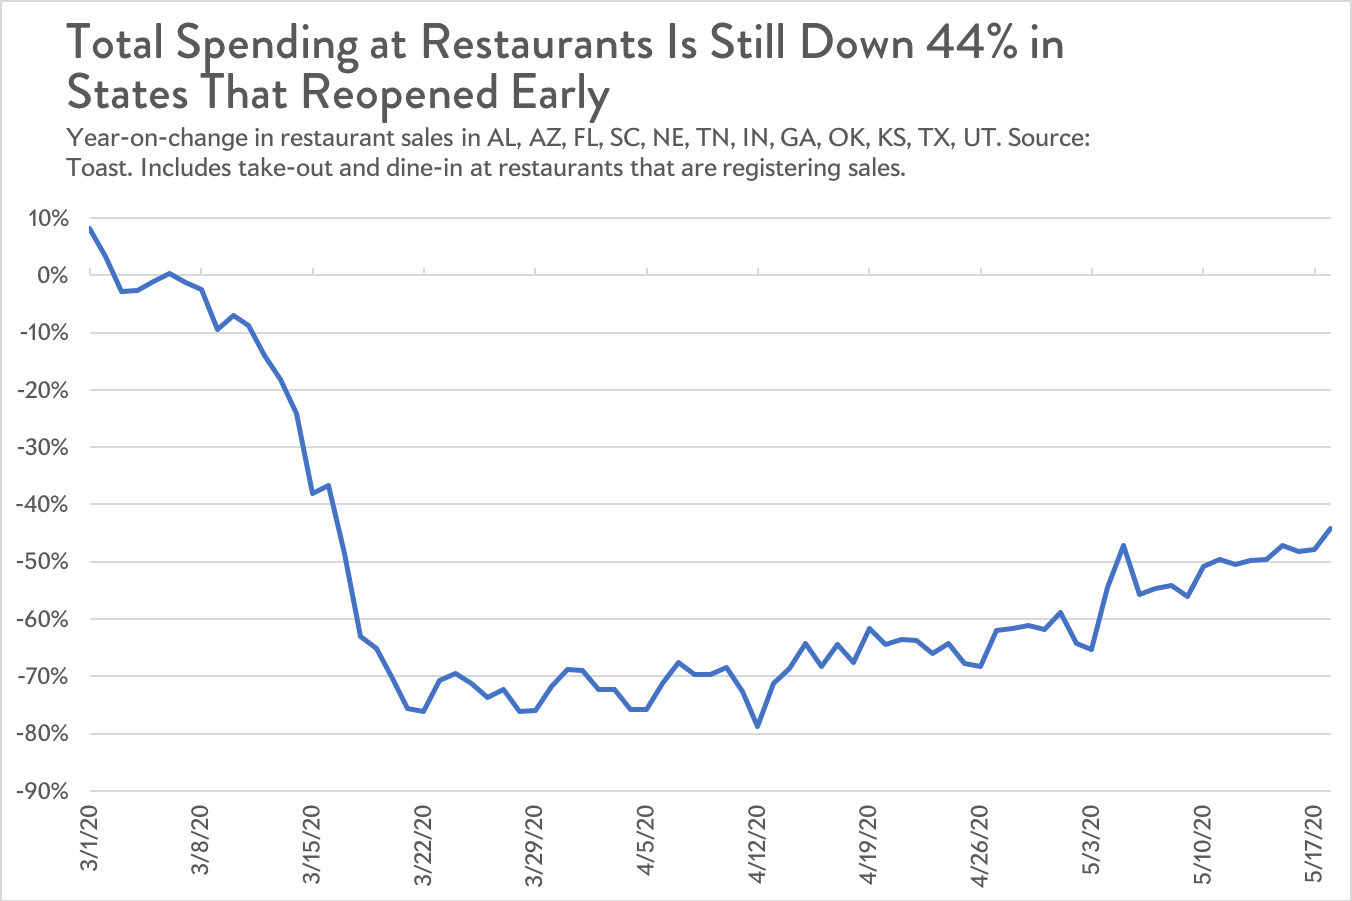 Revenue at restaurants during coronavirus